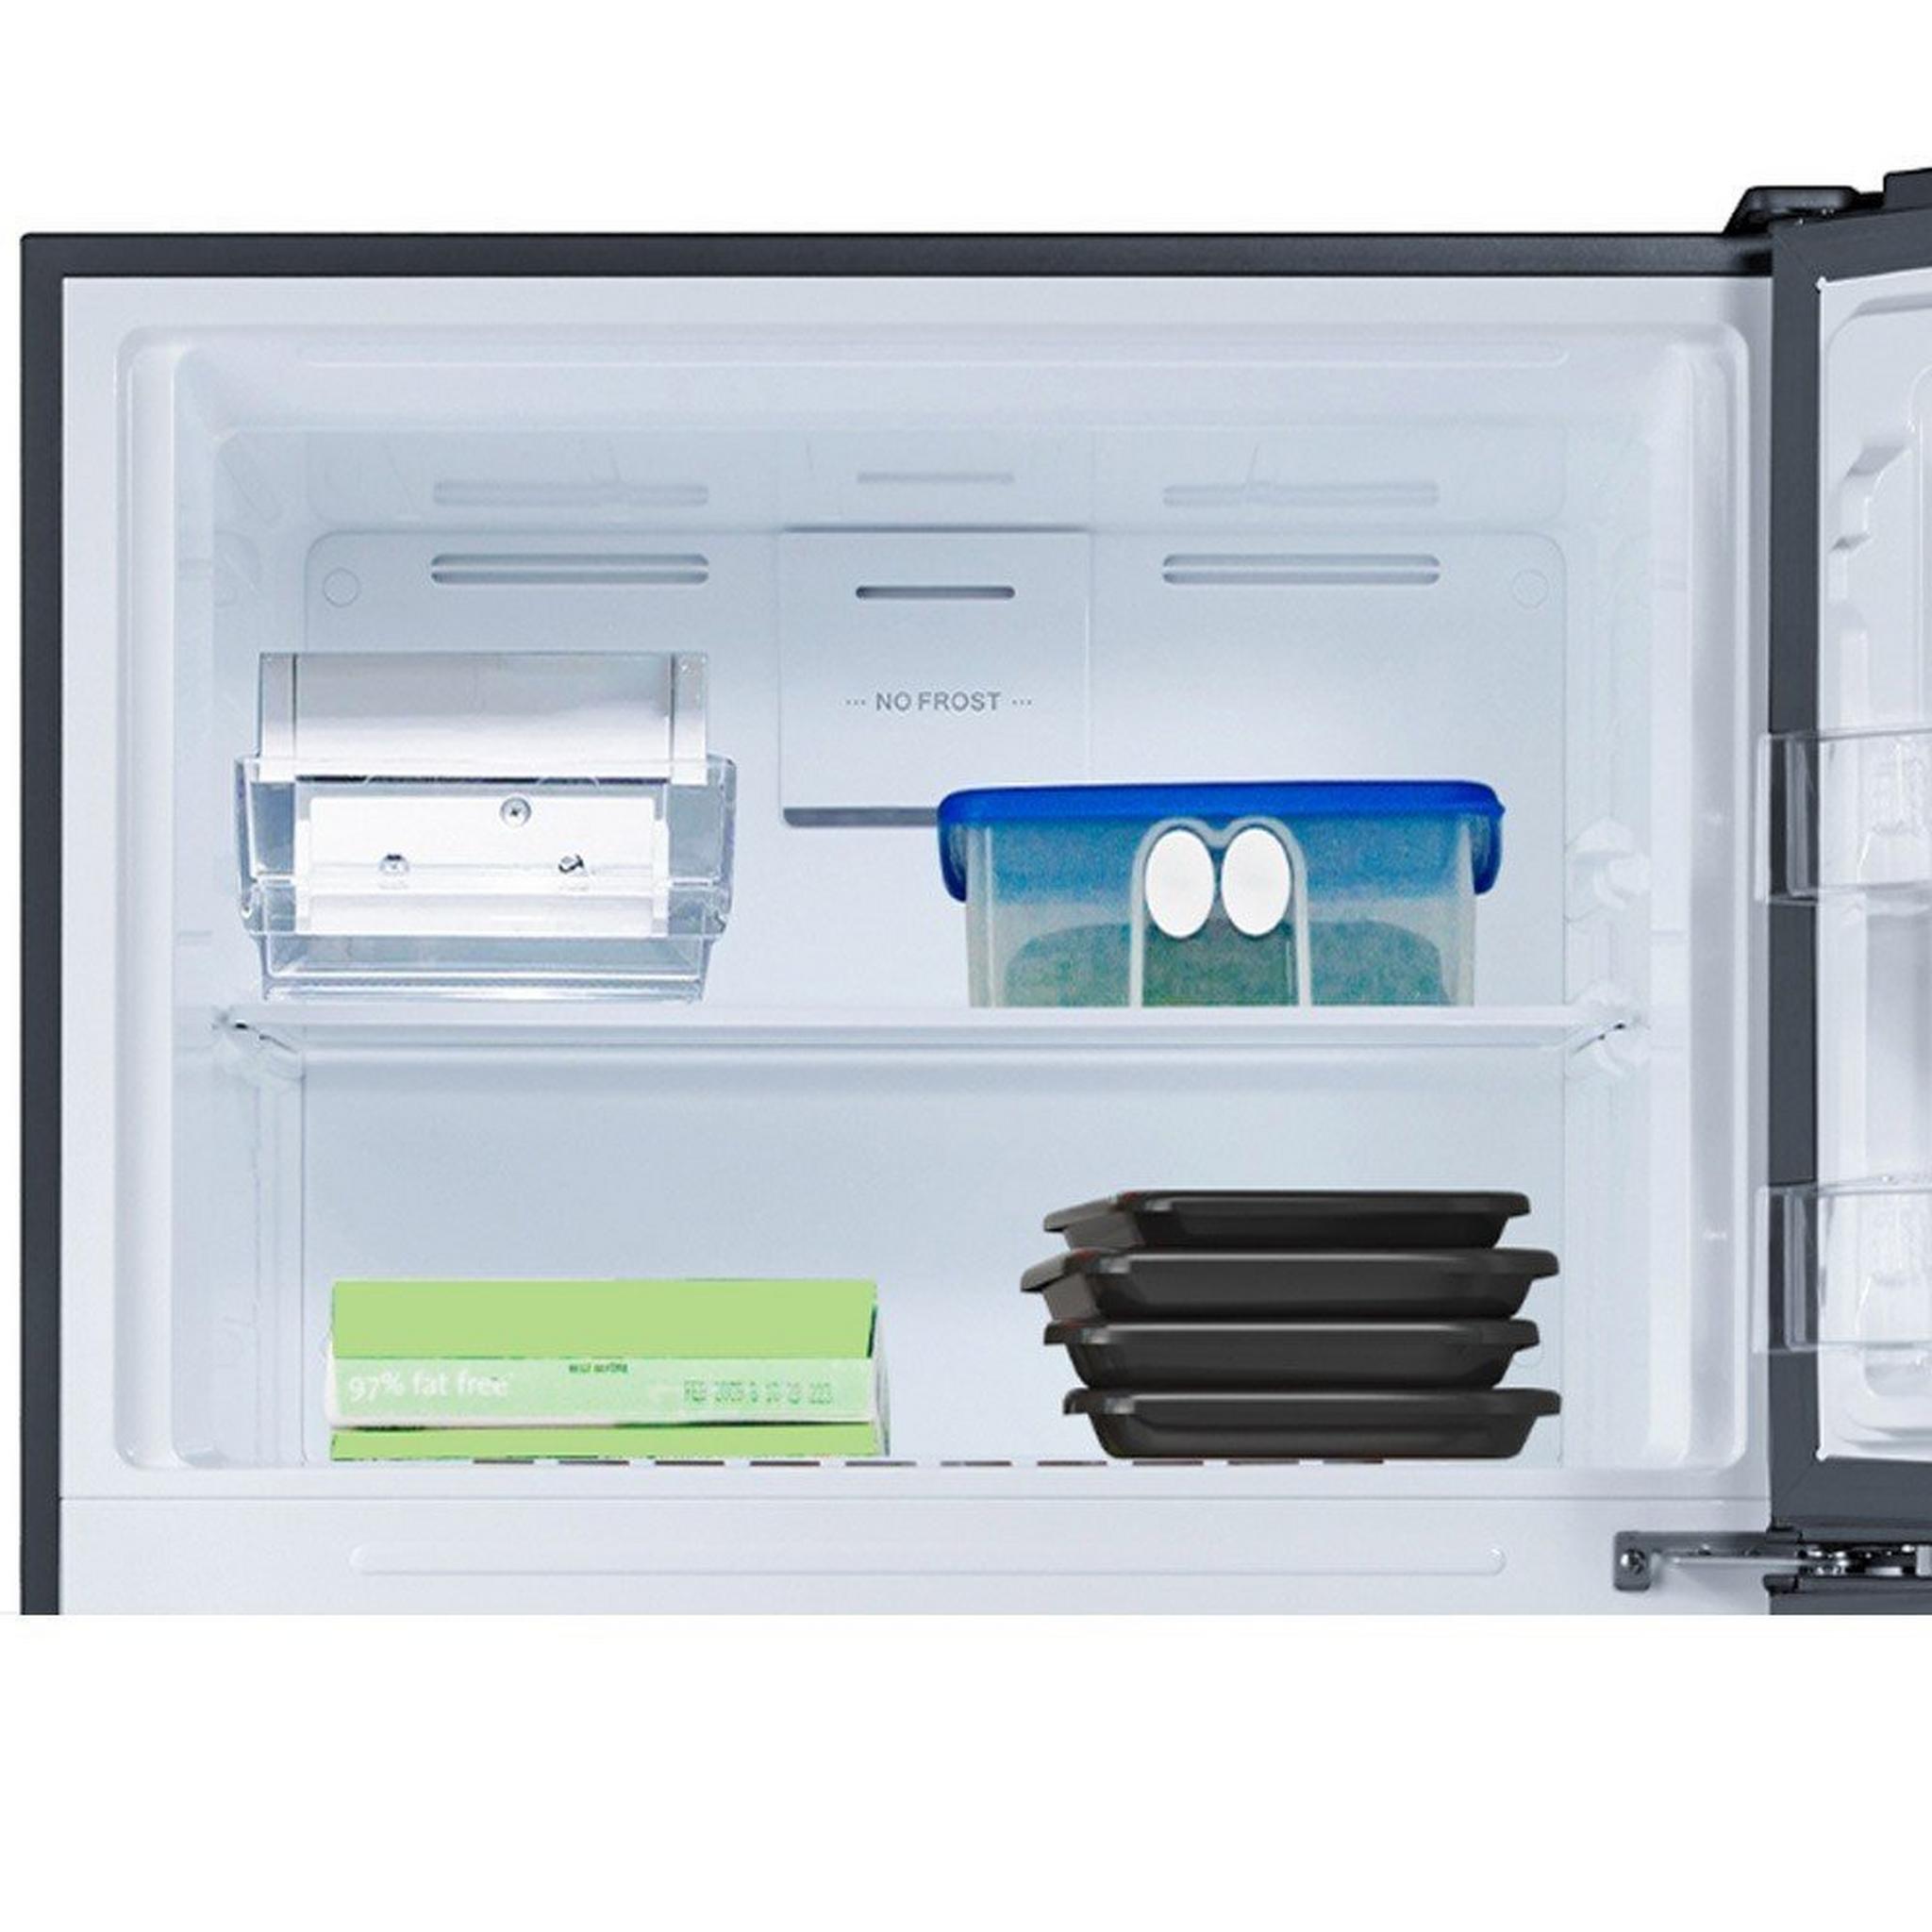 Panasonic 29CFT Top Freezer Refrigerator  (NR-BC833VSA)